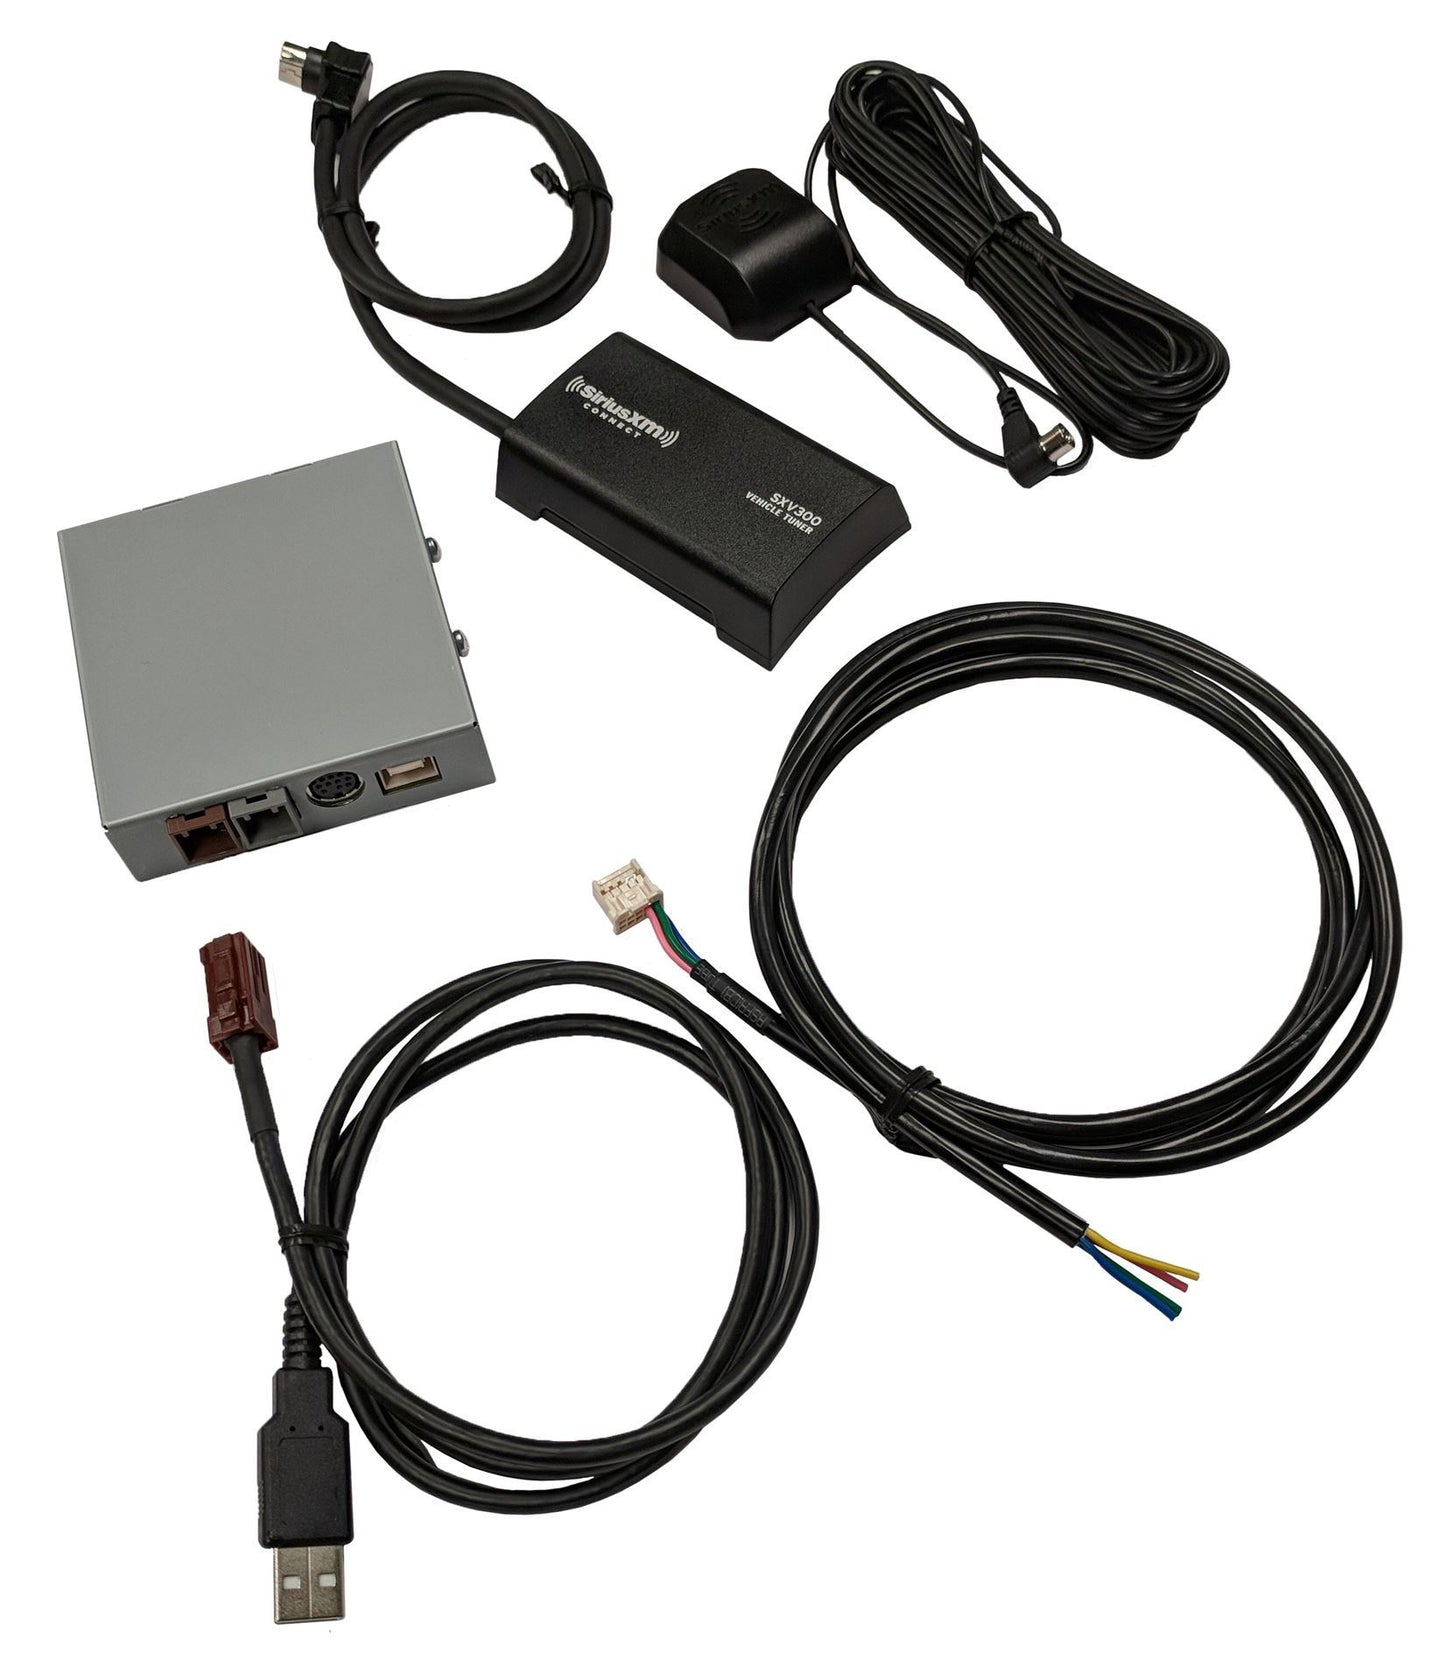 Mazda SiriusXM Satellite Radio Interface (sxv tuner sold separately)